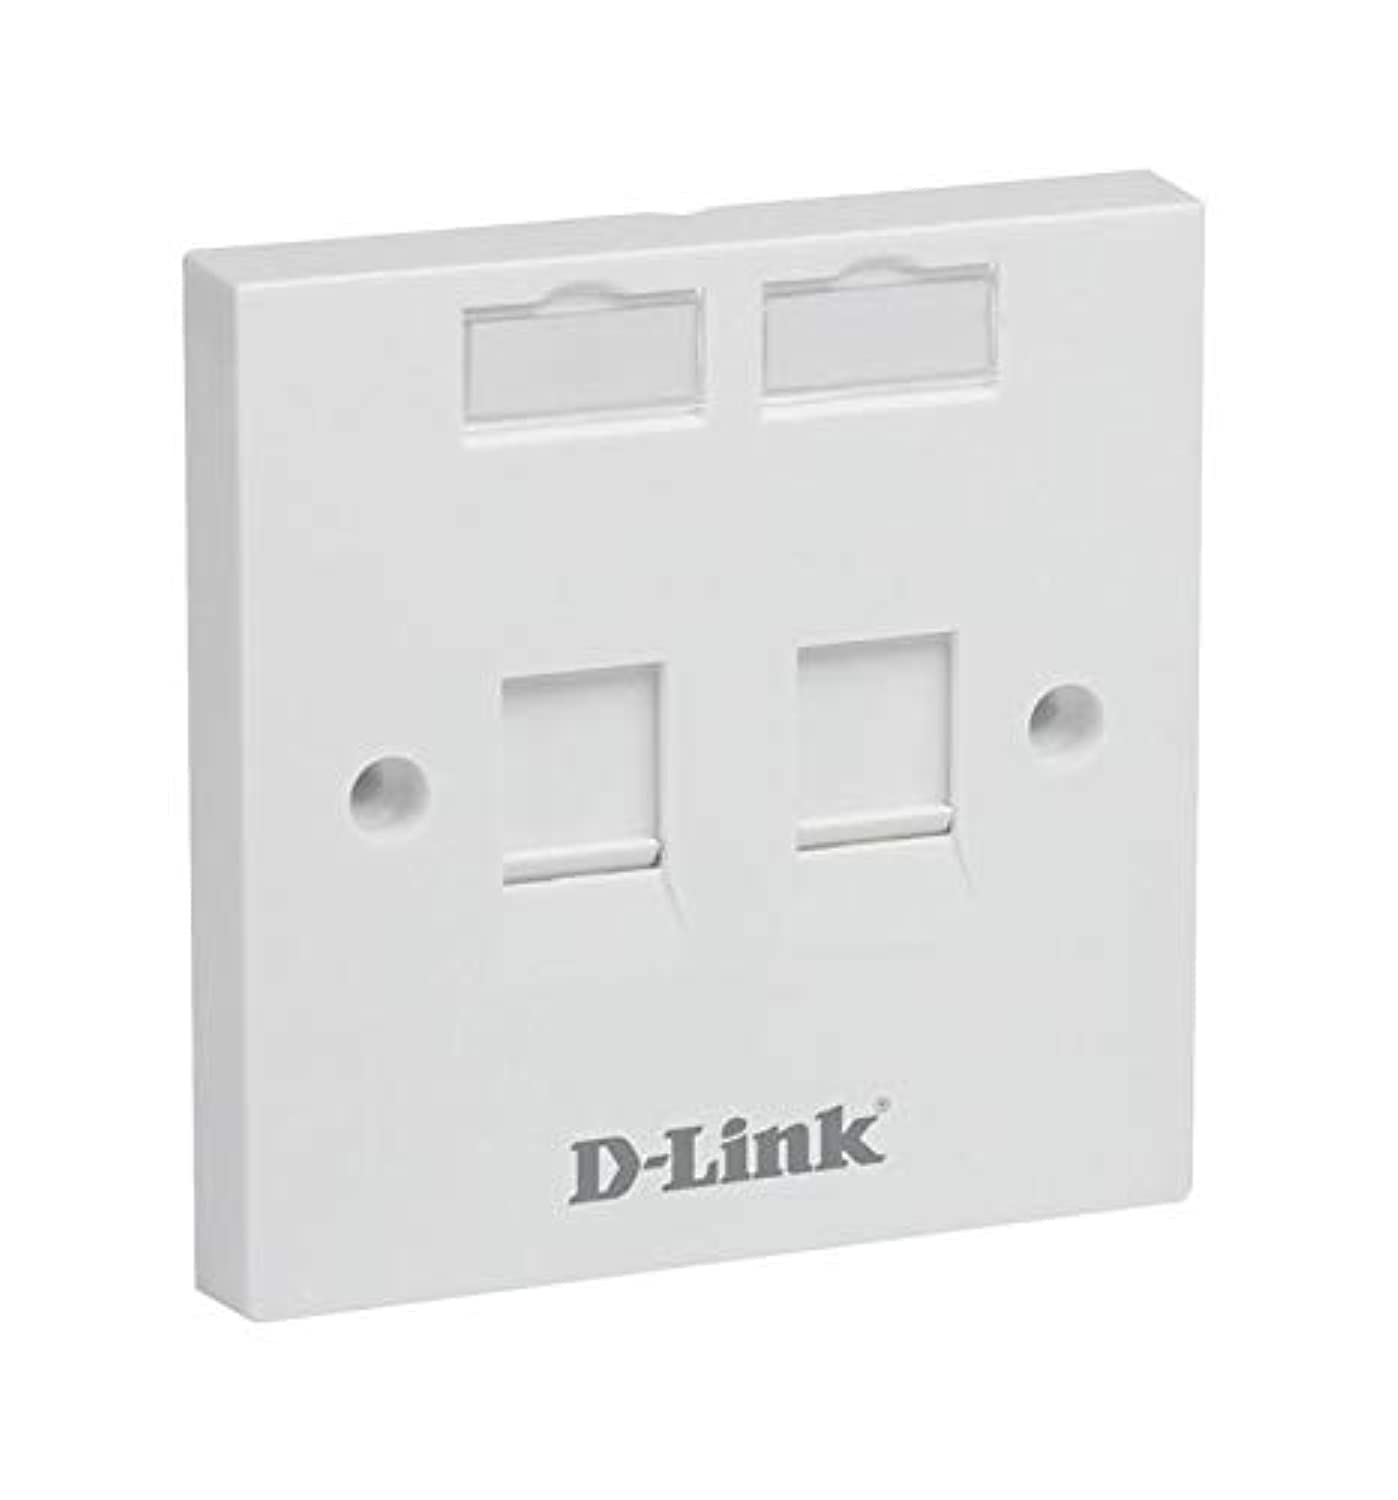 D-LINK FACE PLATE QUAD NFP I/O NETWORK KEYSTONE //GANG BOX